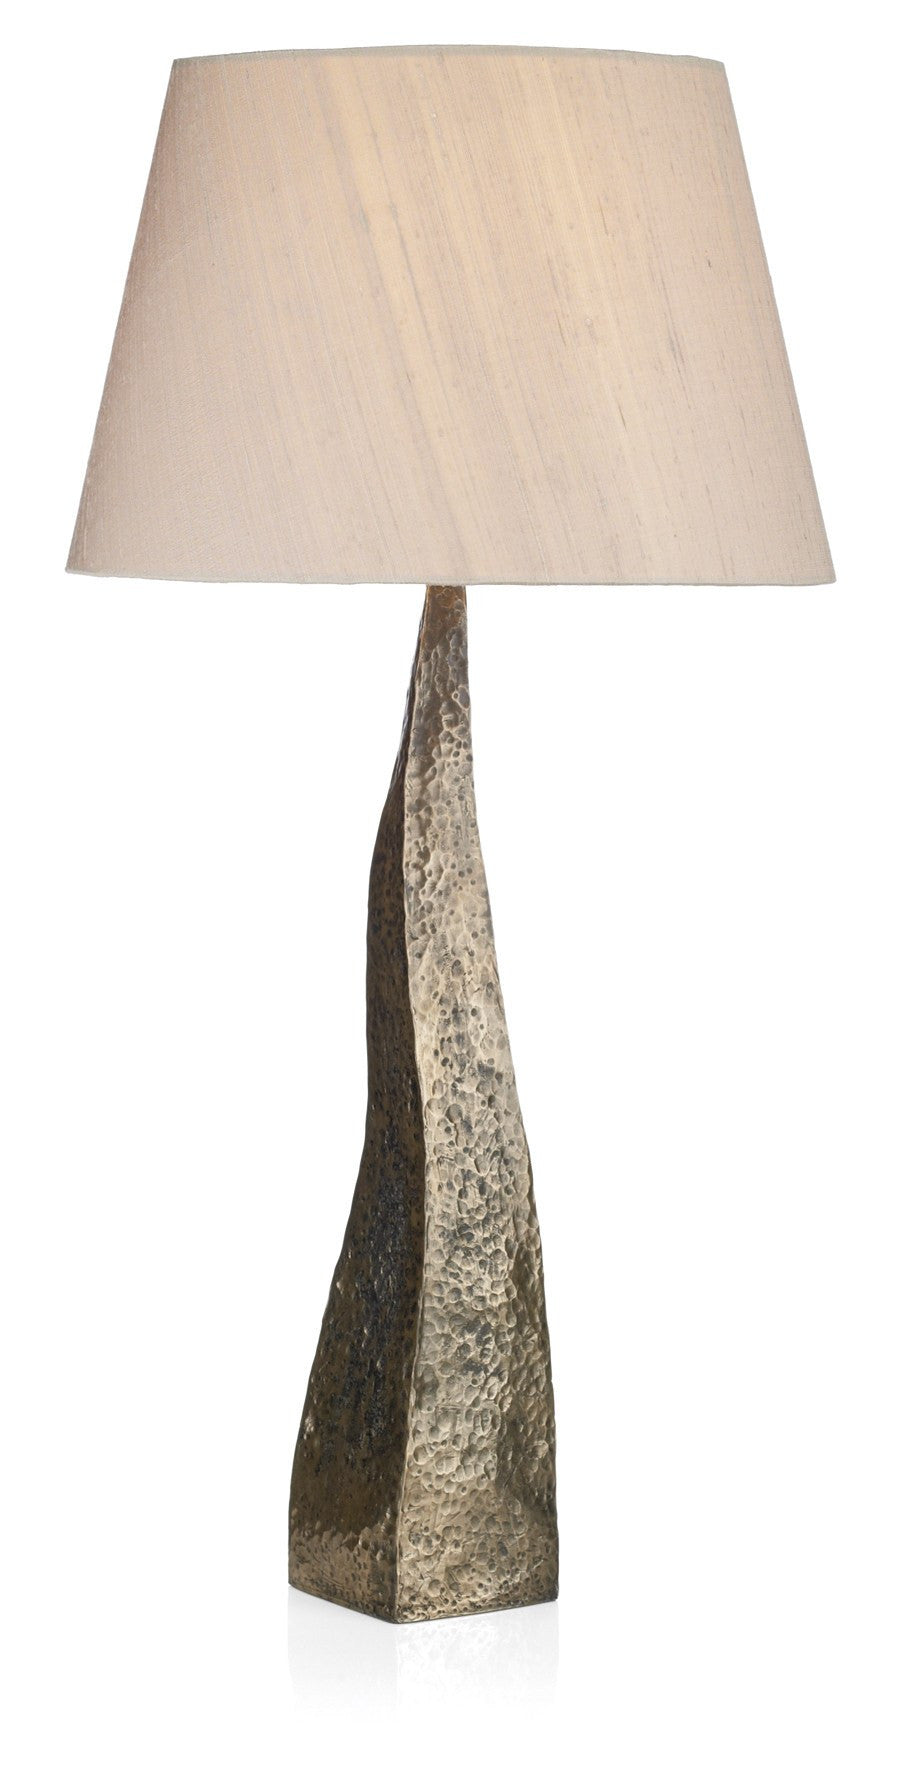 Aztec Copper Table Lamp - London Lighting - 1